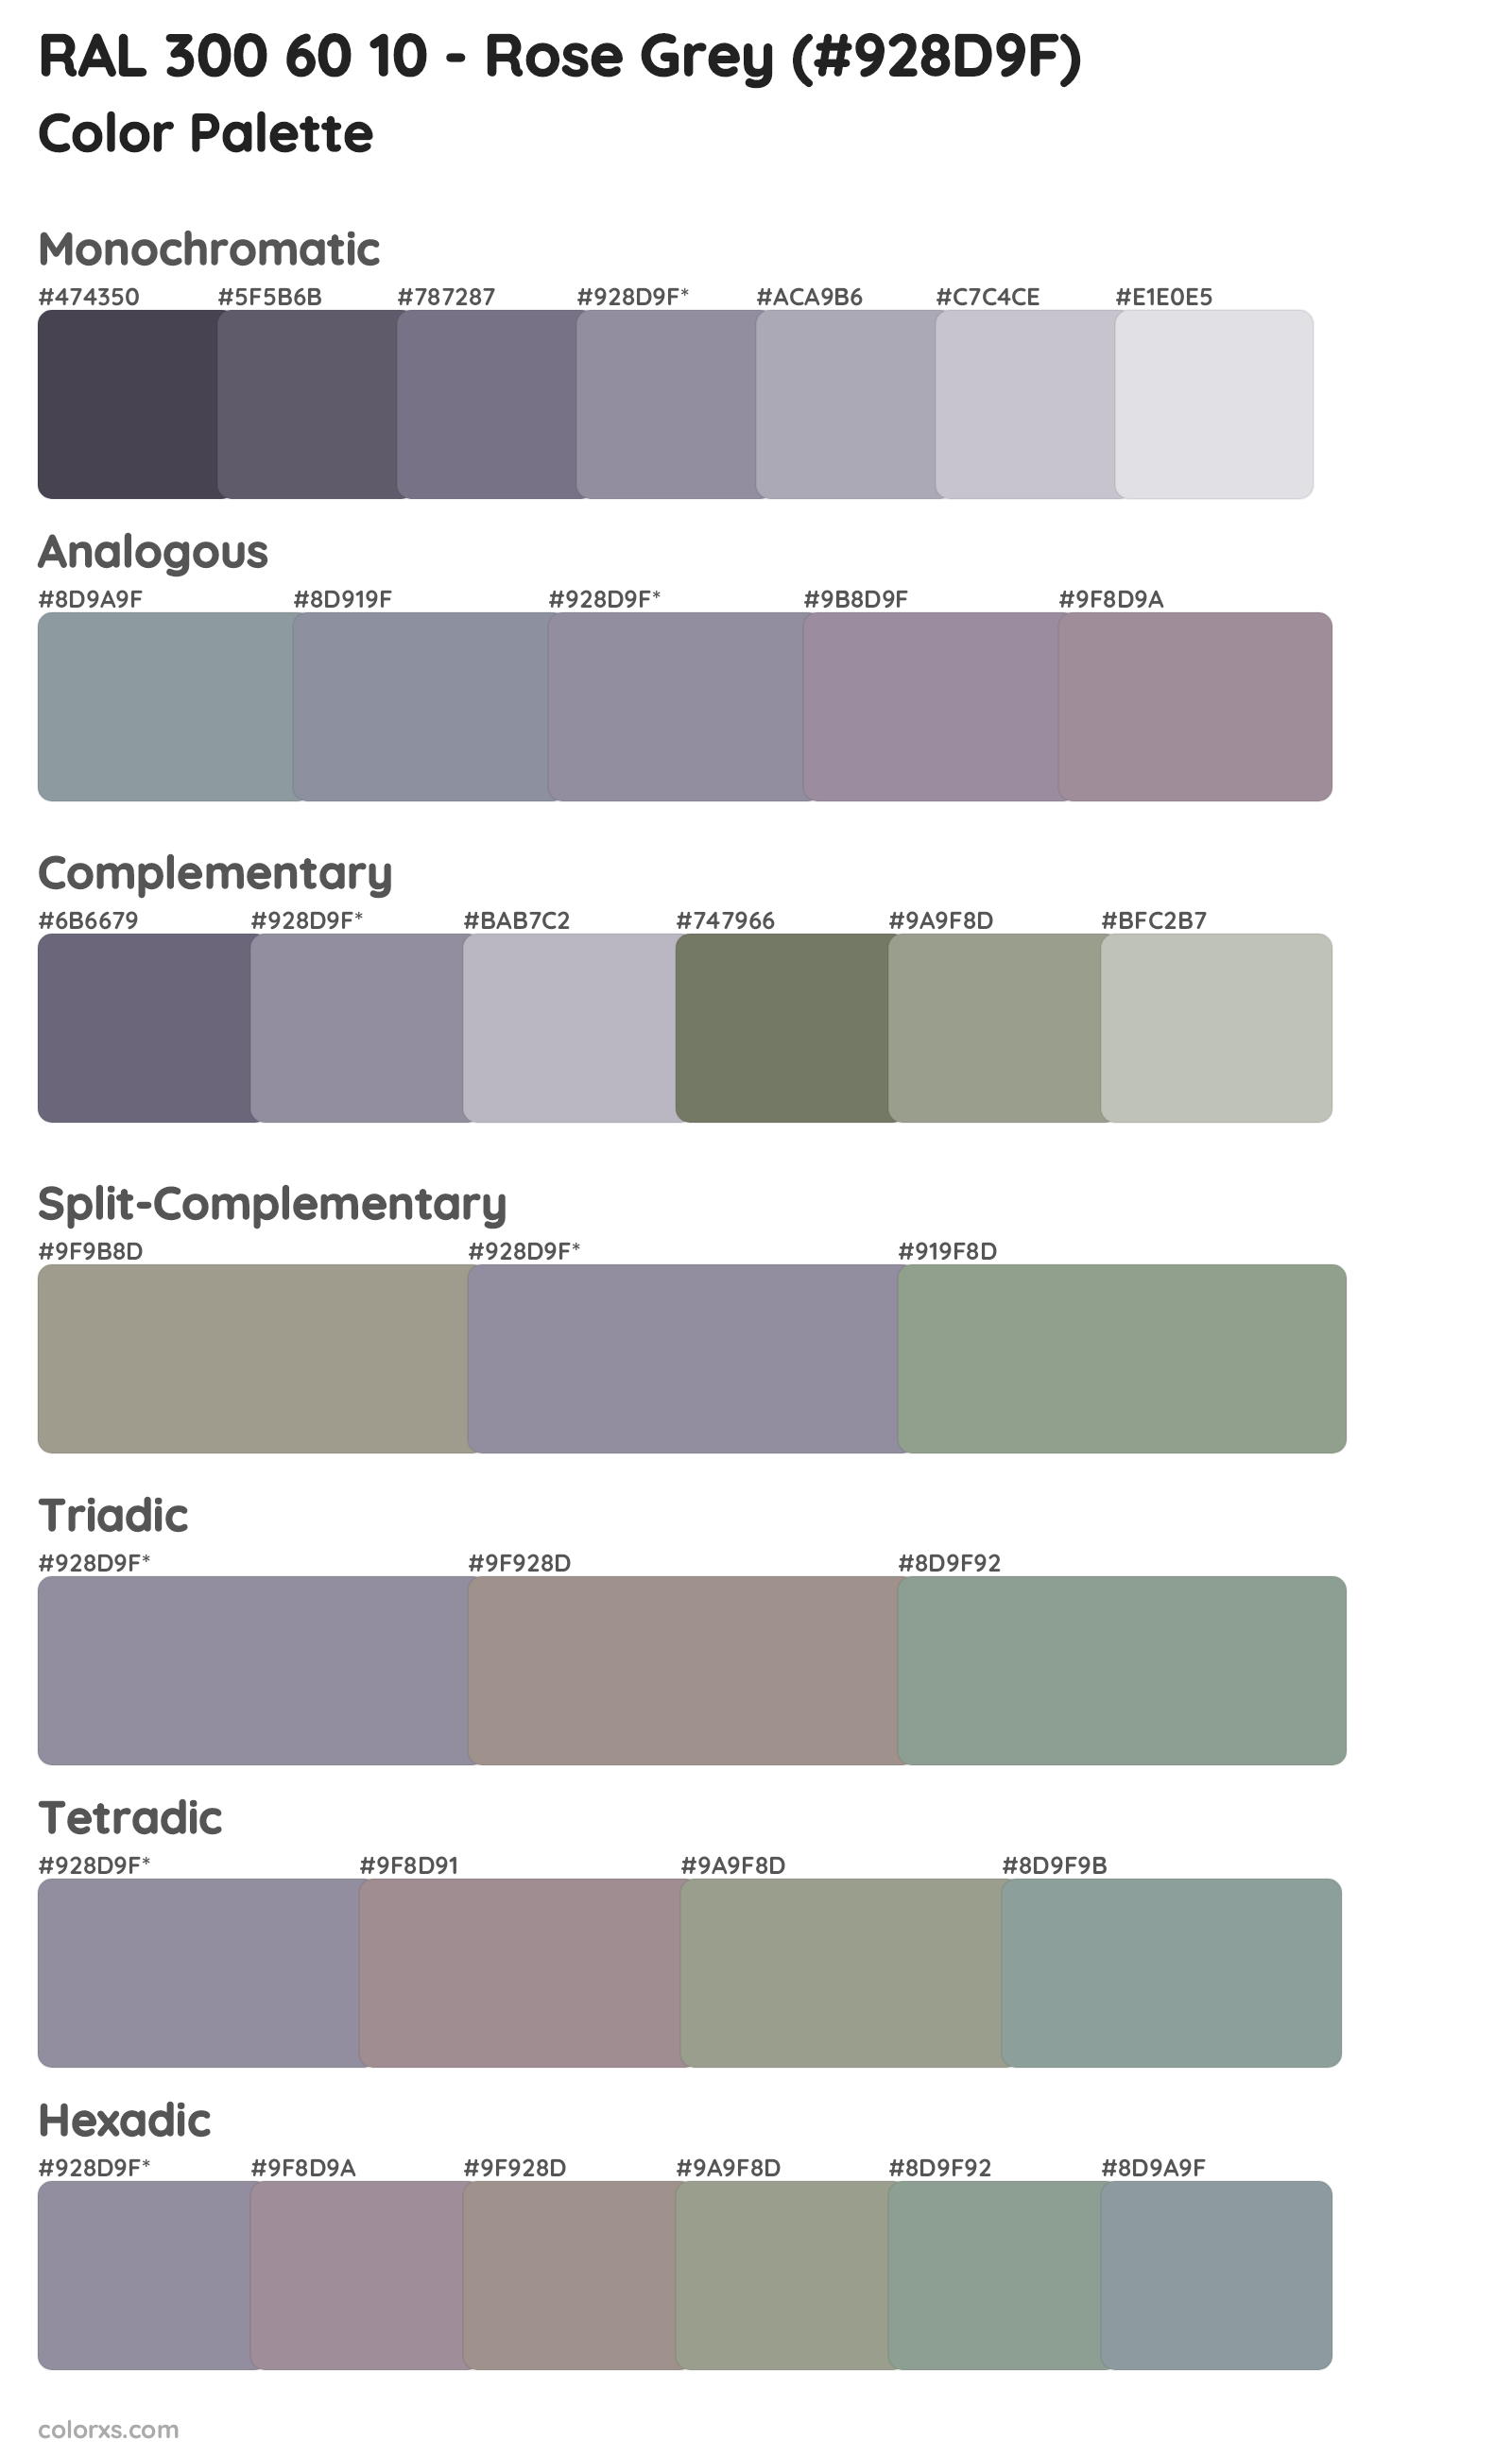 RAL 300 60 10 - Rose Grey Color Scheme Palettes